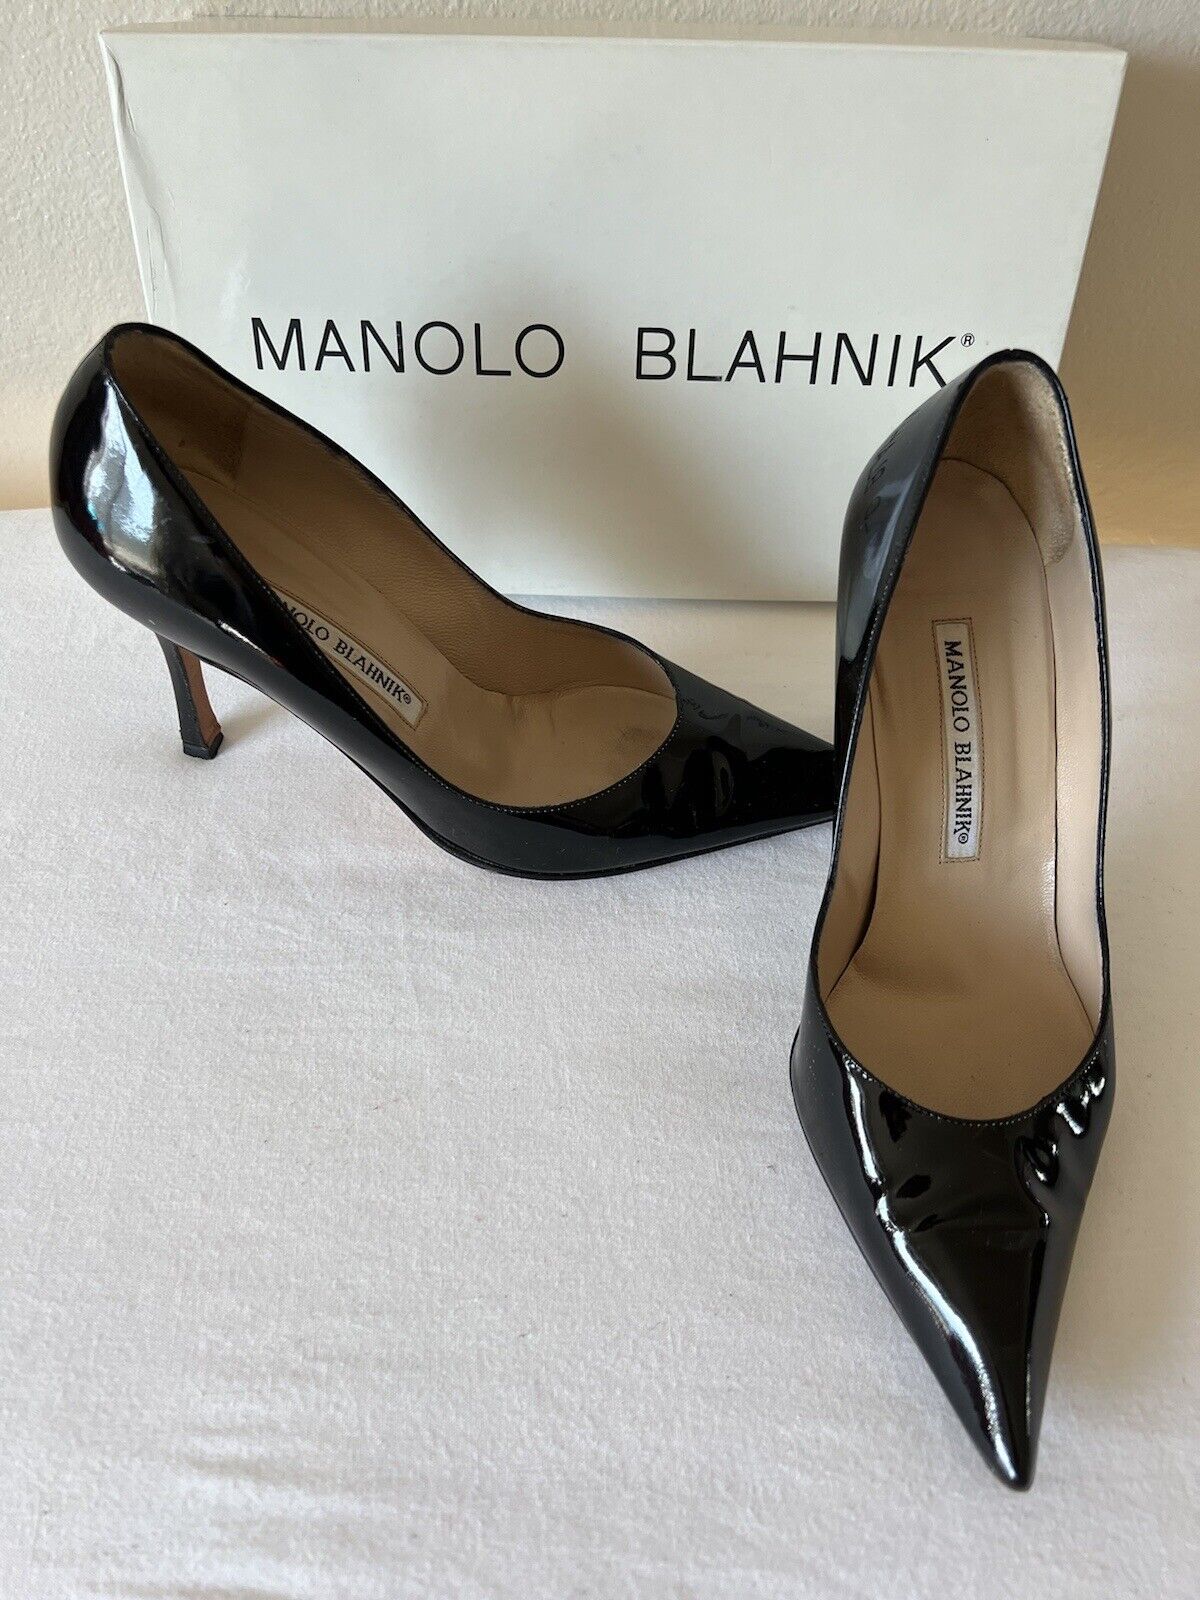 VINTAGE MANOLO BLAHNIK Black Patent Leather High Heels Pumps Sz 36